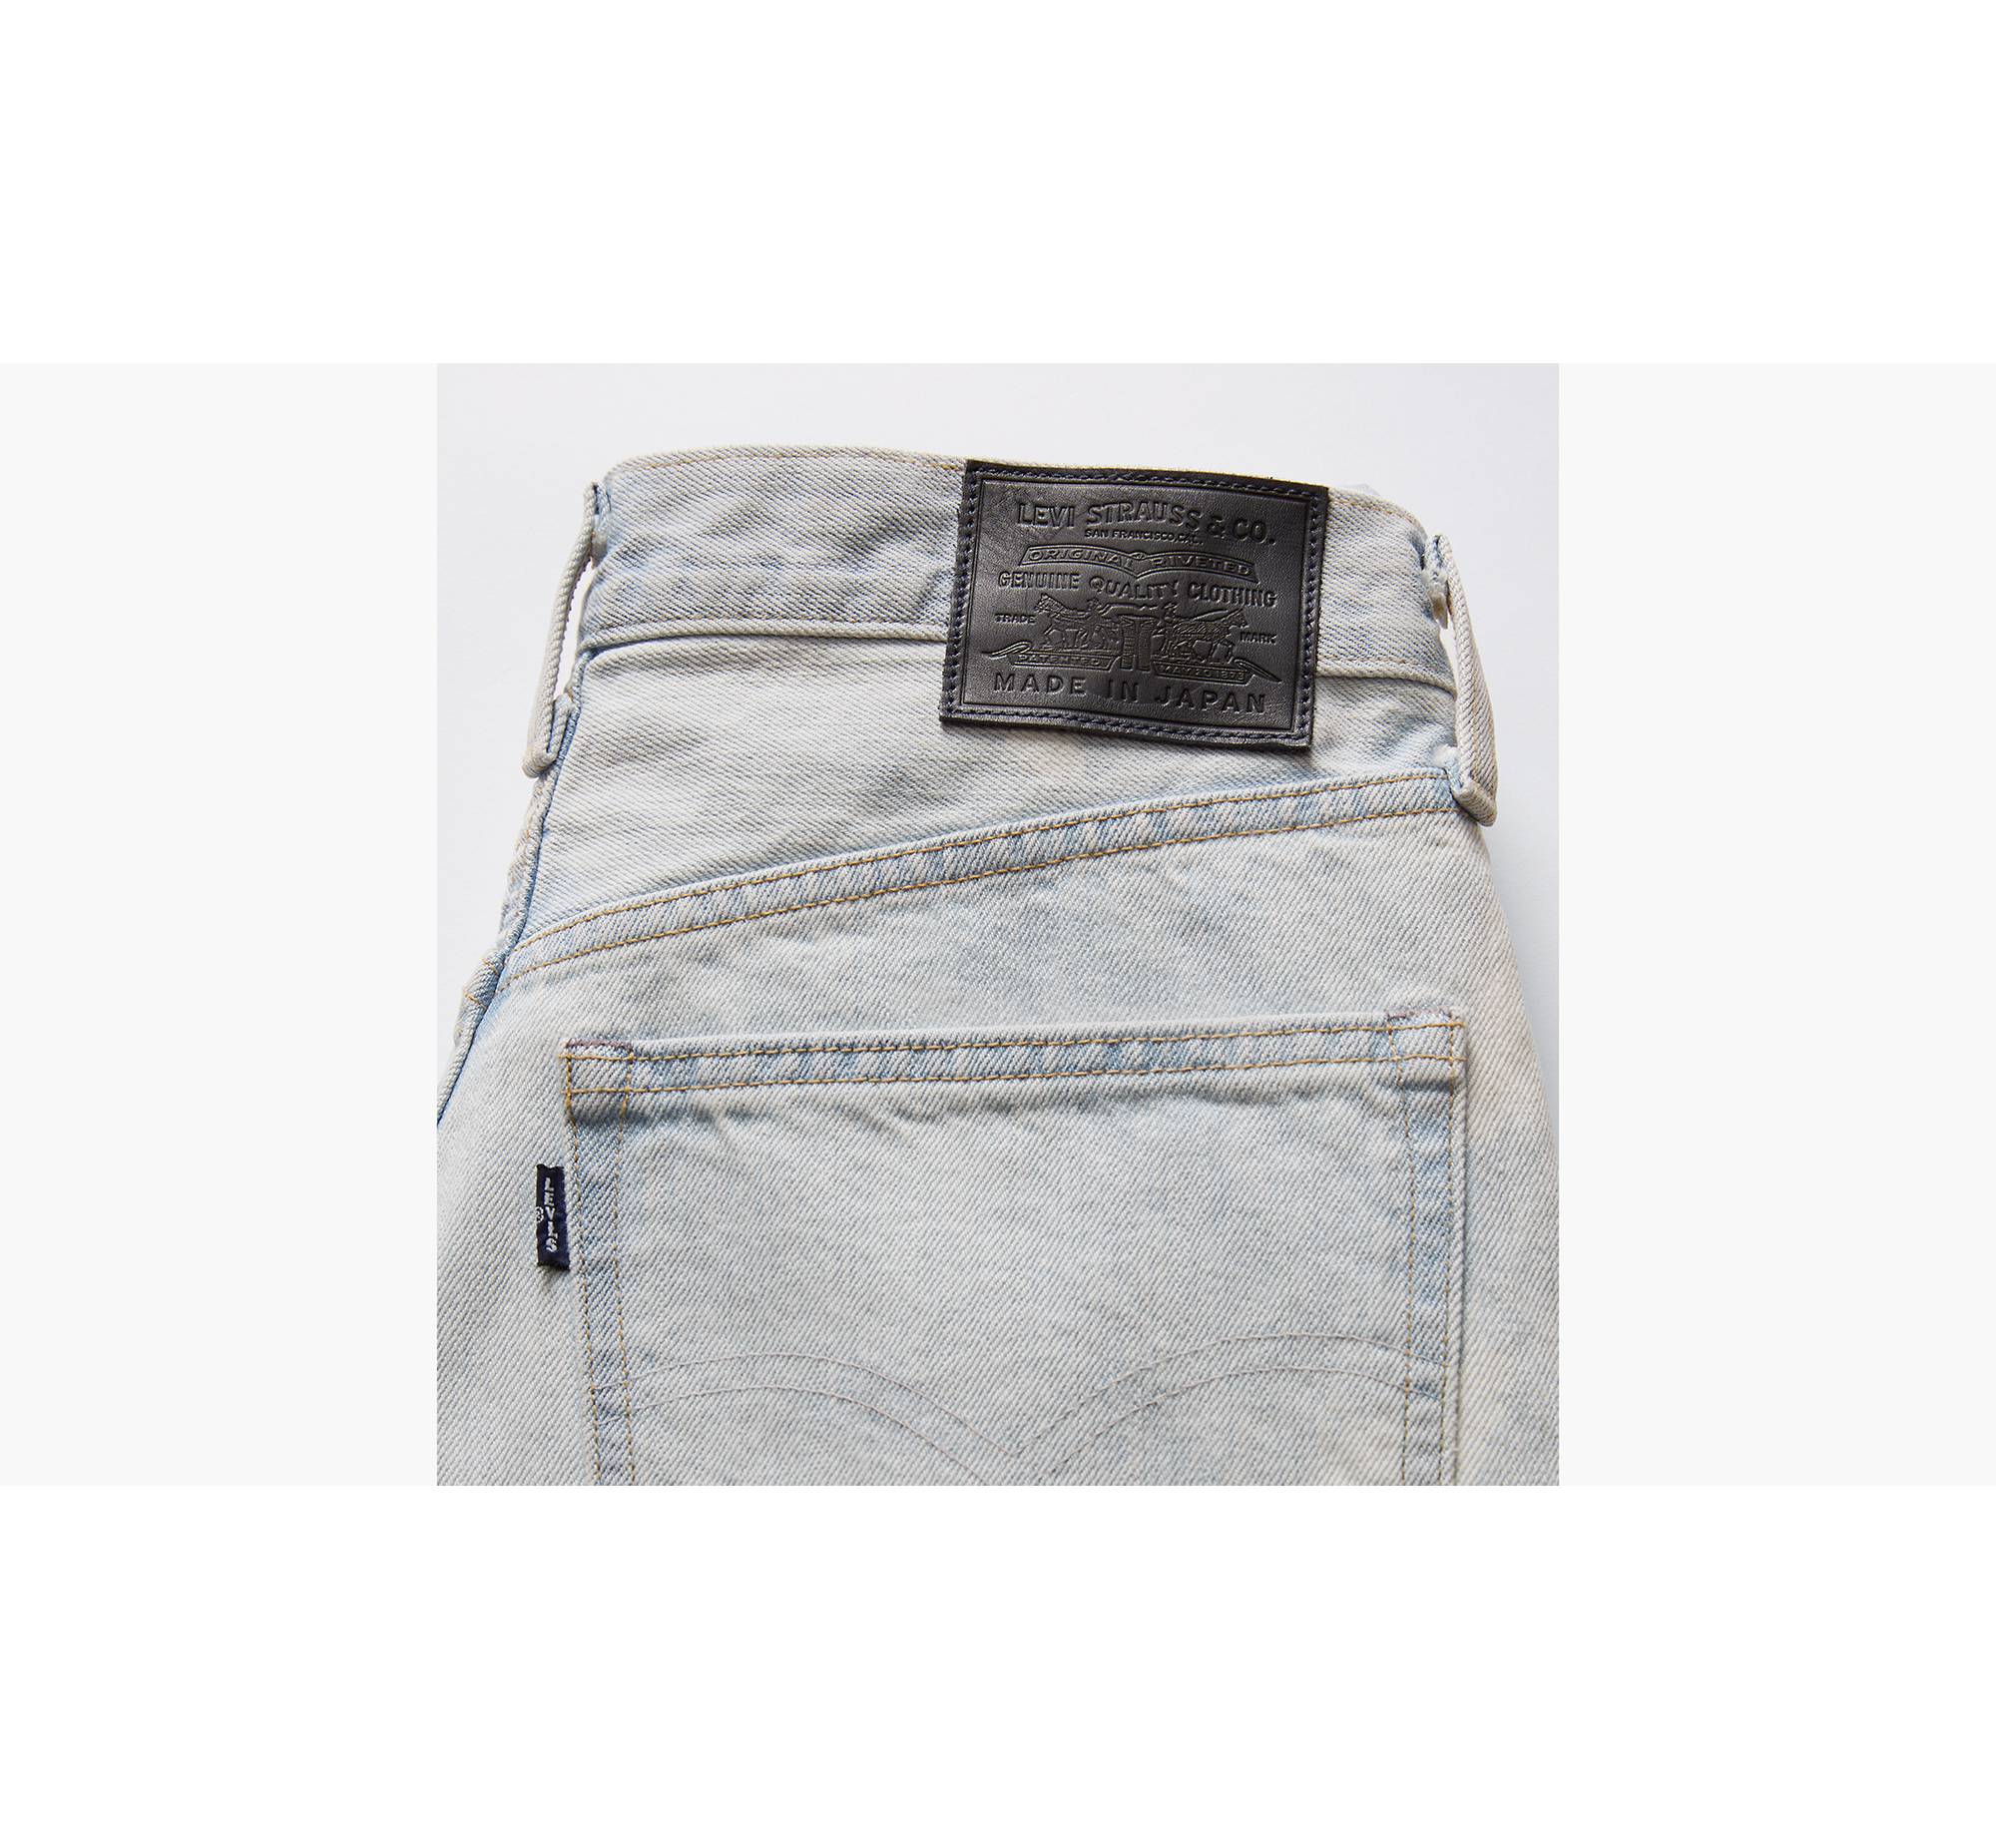 Levi's® Made In Japan Barrel Jeans - Blue